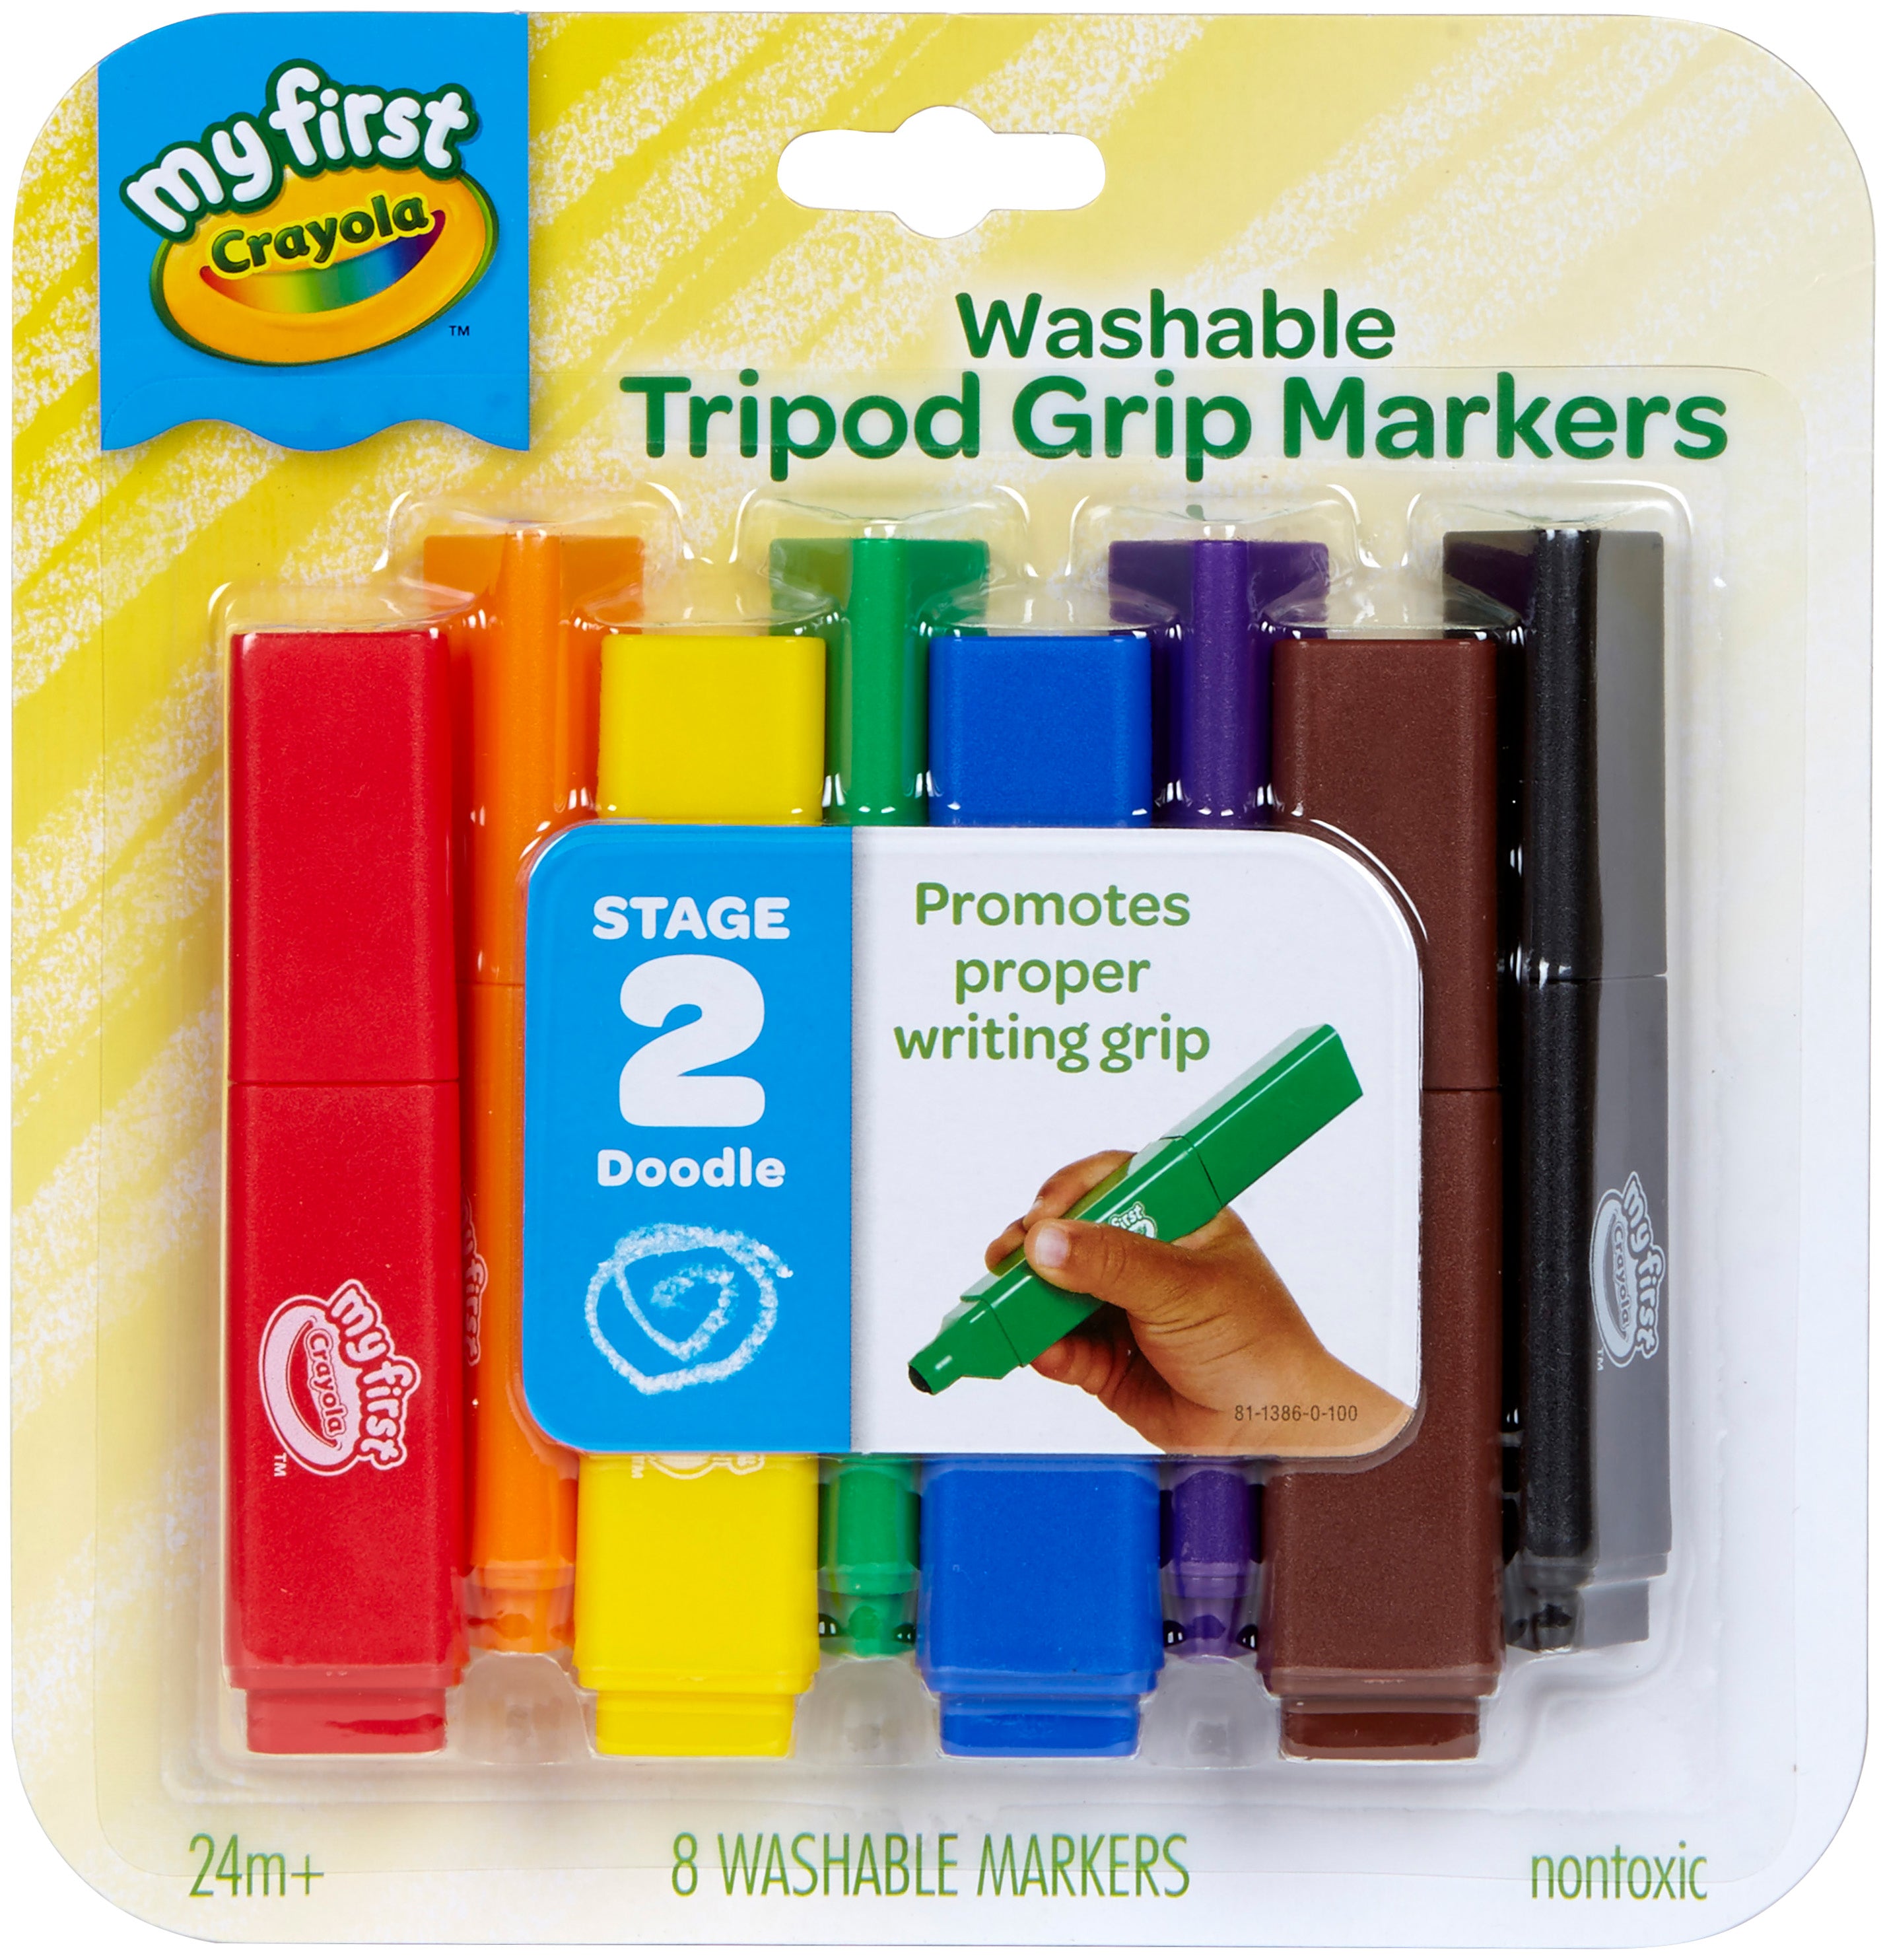 Sharpie Chisel Tip Markers (Set of 8)